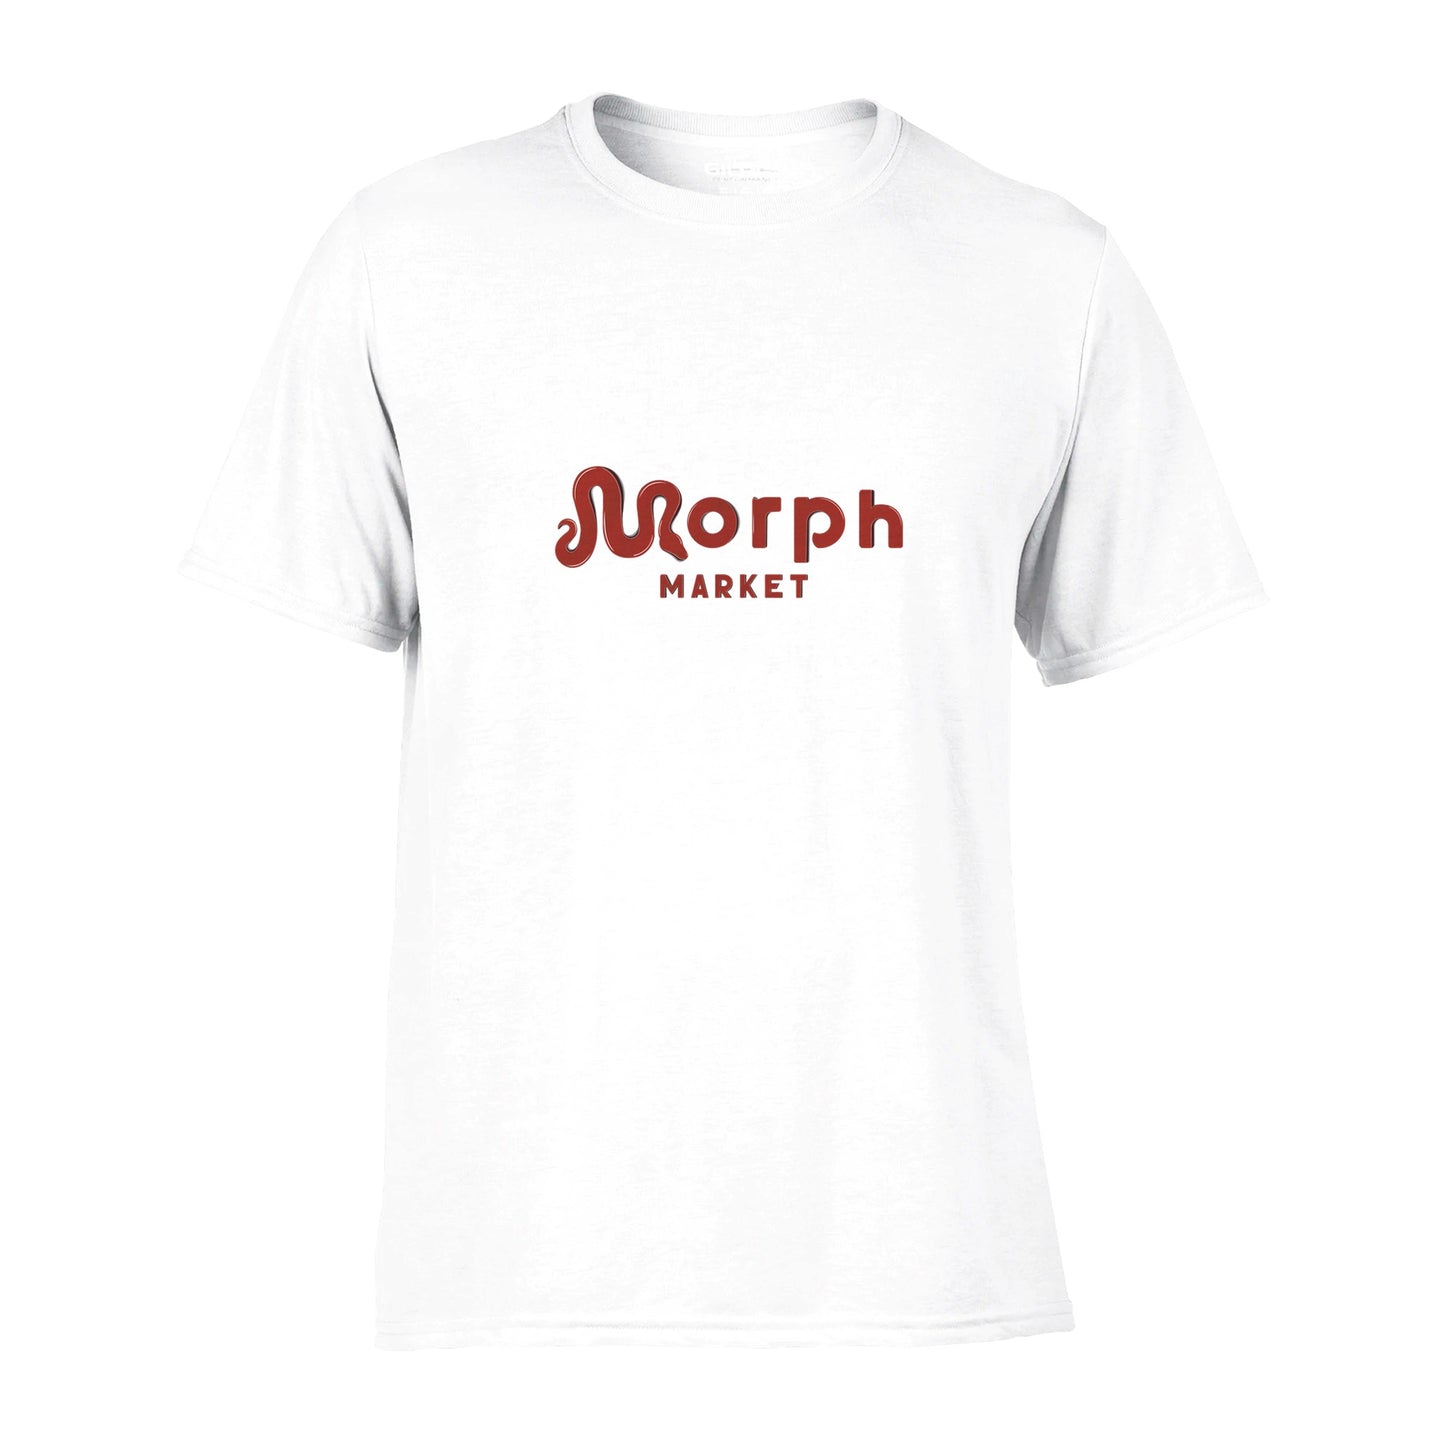 Morph Market (Red) - Morph Market (Red) - Performance Unisex Crewneck T-shirt